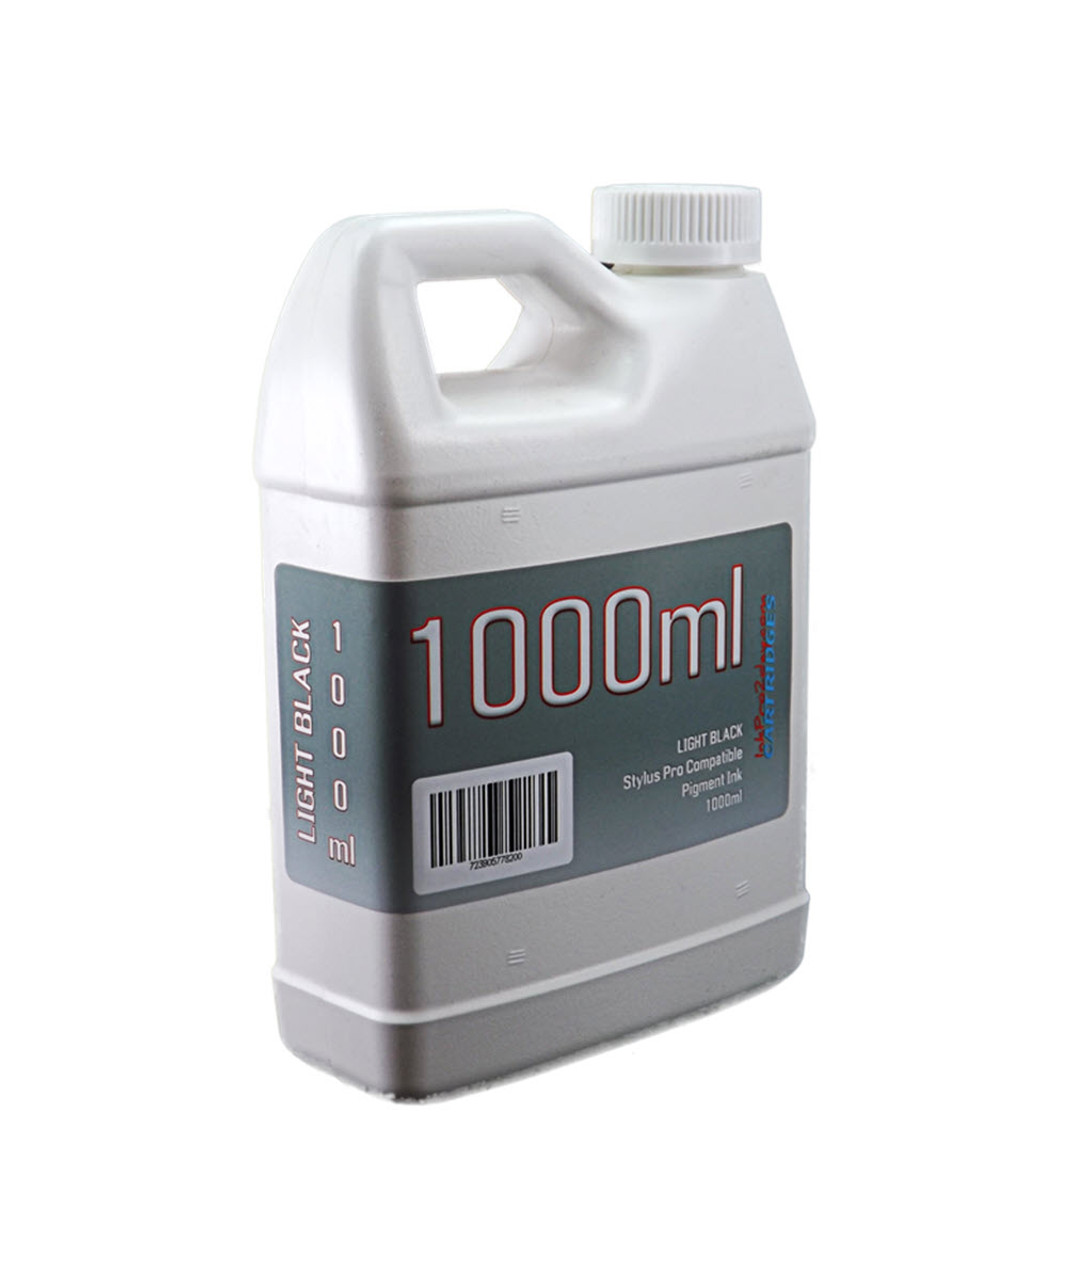 Light Black 1000ml Bottle Compatible UltraChrome HDR Pigment Ink for Epson Stylus Pro 7890 9890 Printers
